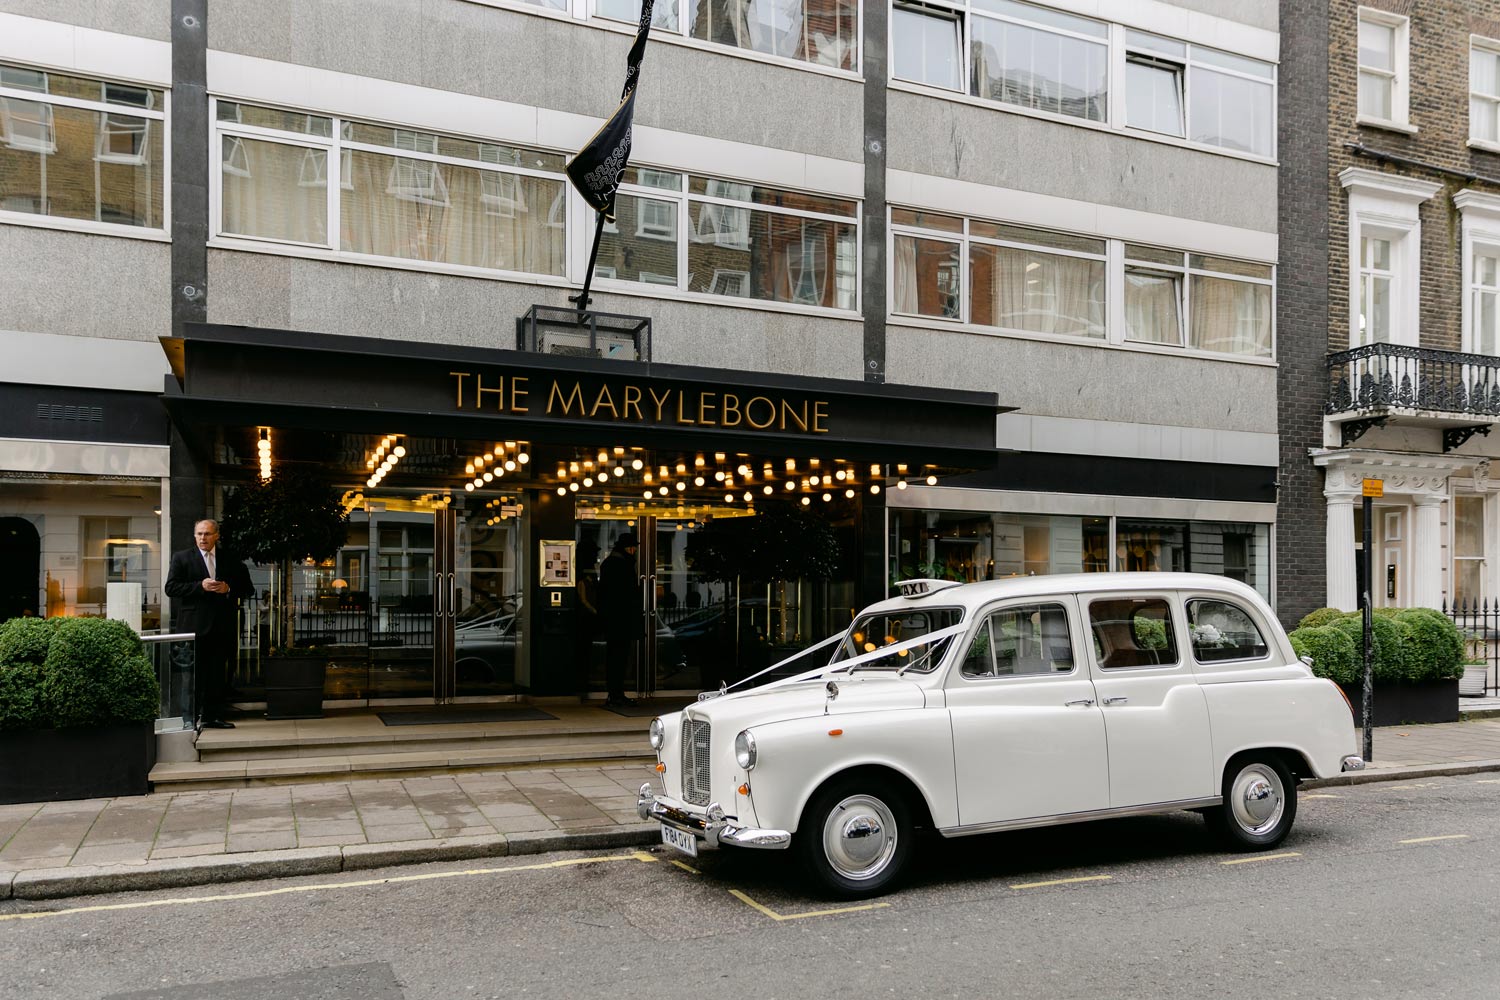 A bridal car waits outside the Marylebone Hotel